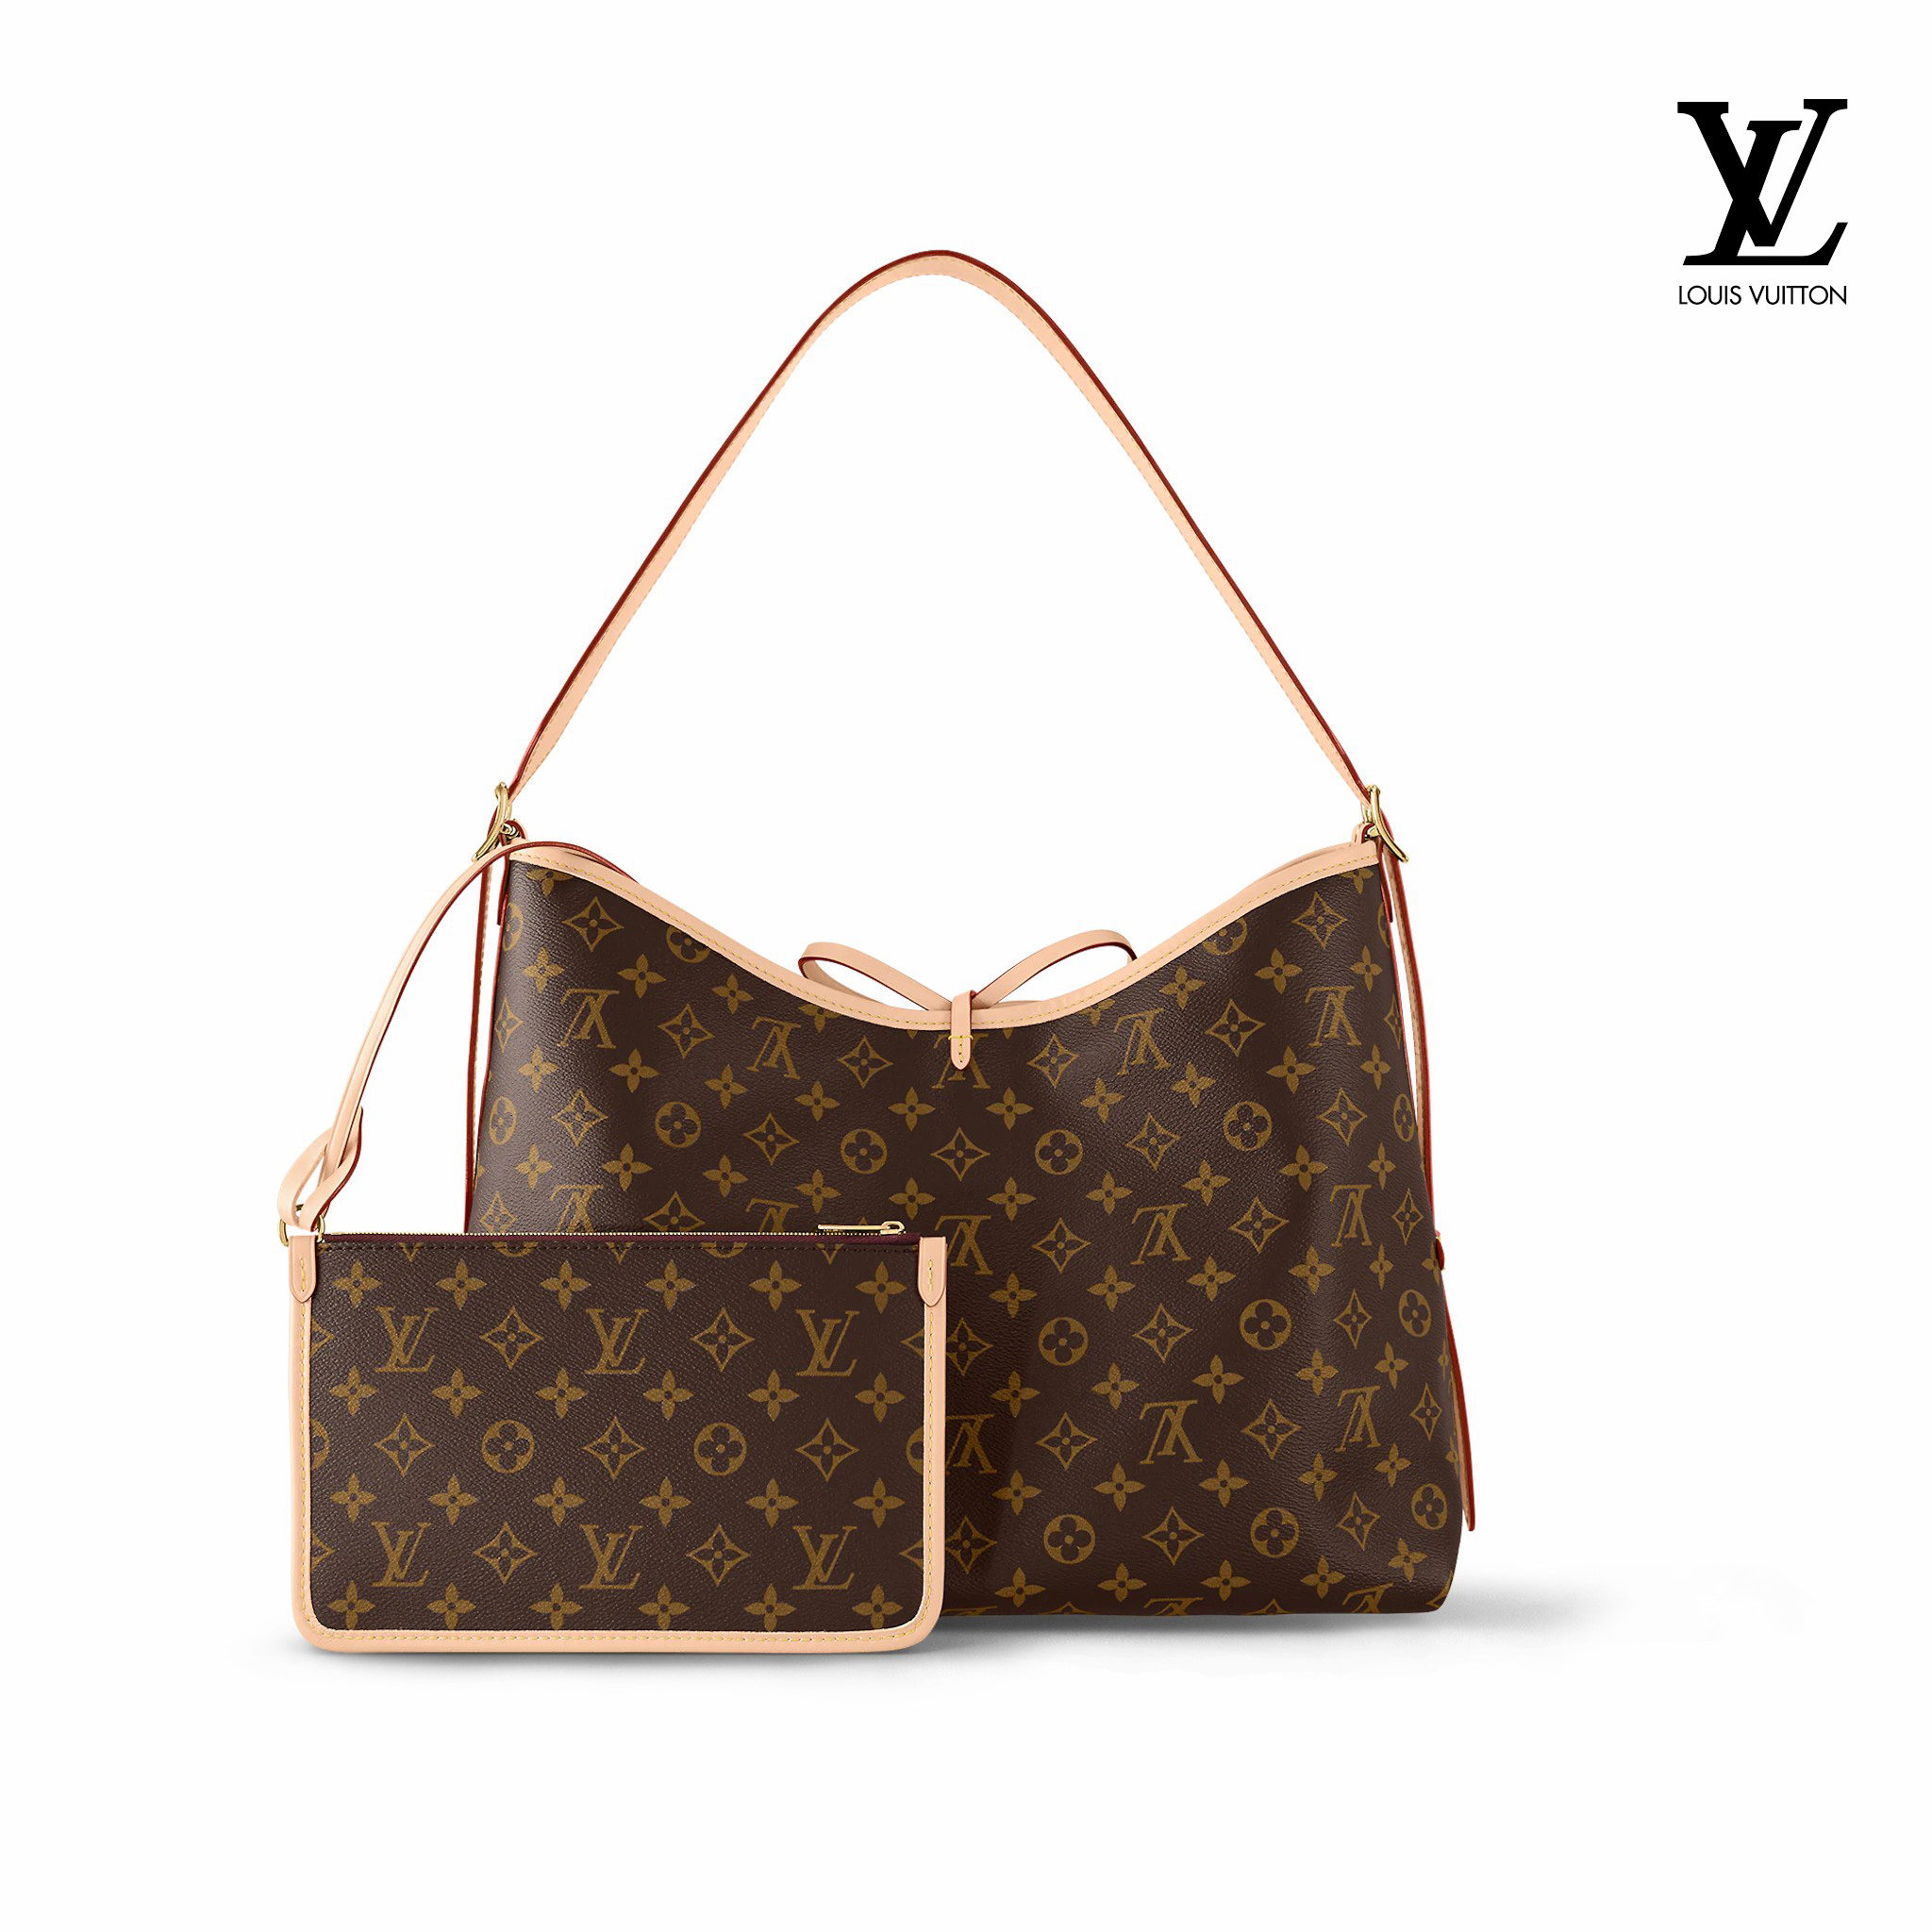 80%OFF!Louis Vuitton CarryAll MM - Luxury Ladies Handbag